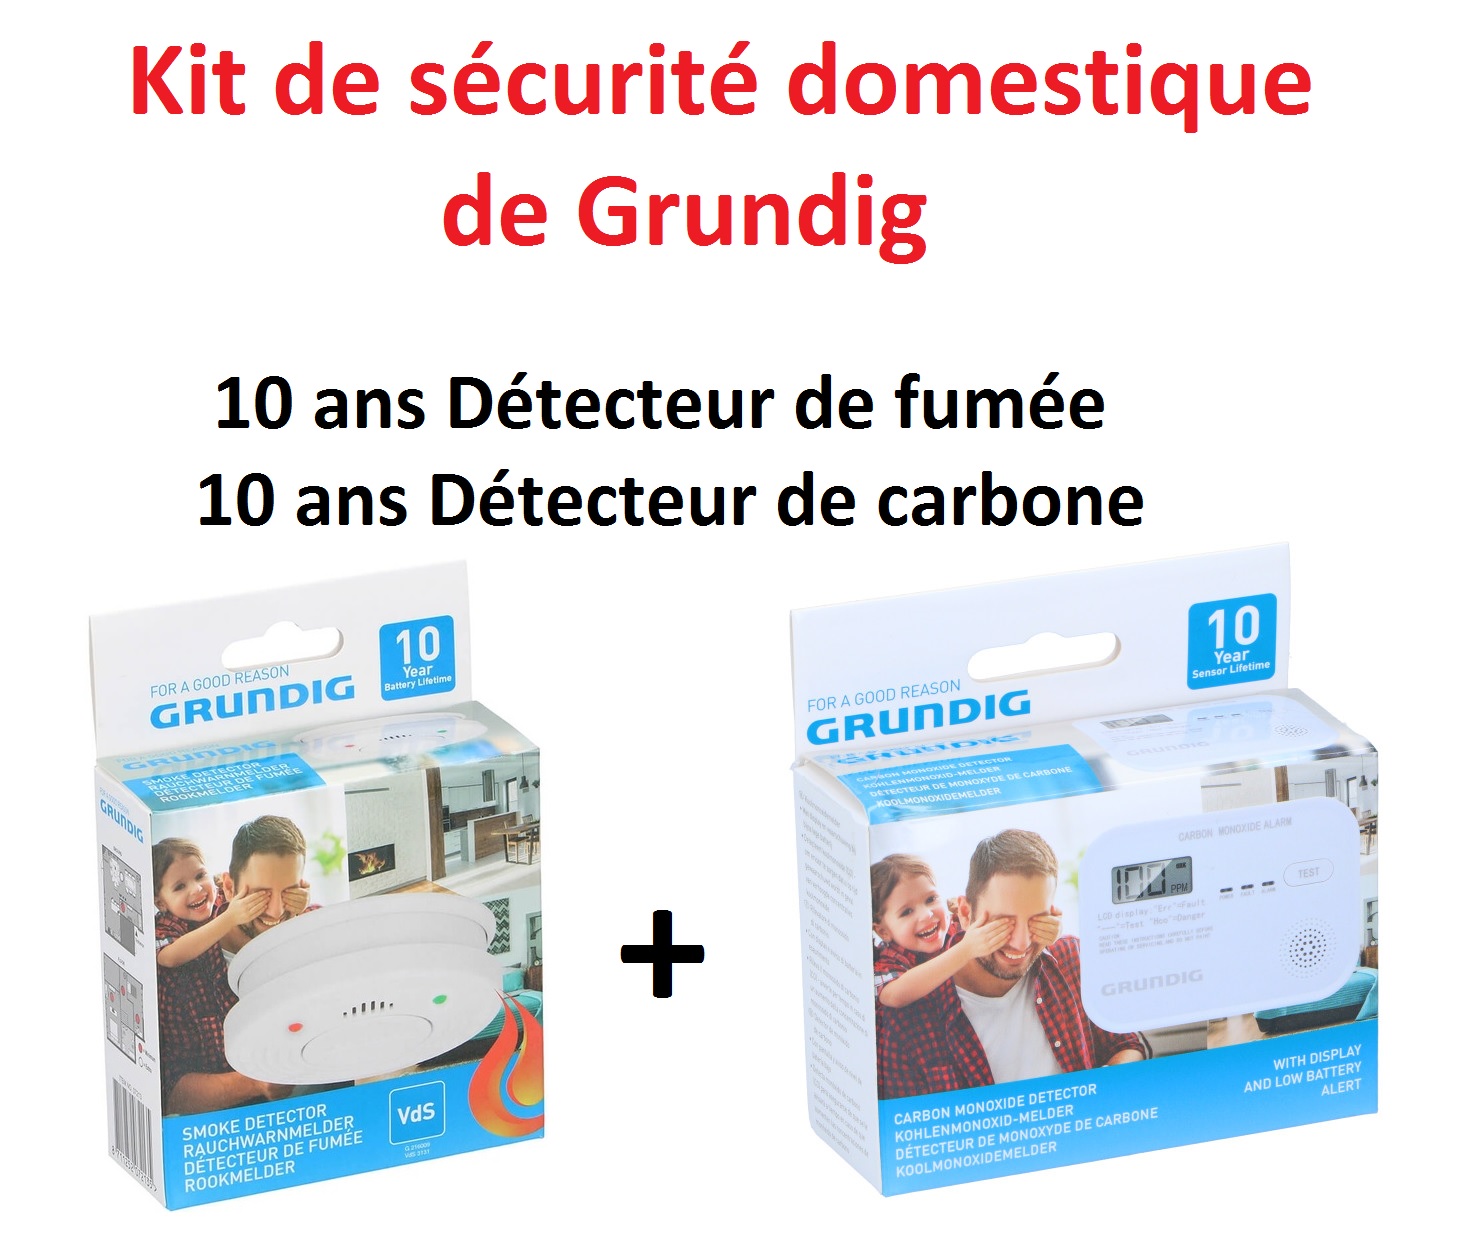 [:fr]Kit de sécurité domestique de Grundig[:en]Grundig Home Safety Kit[:]